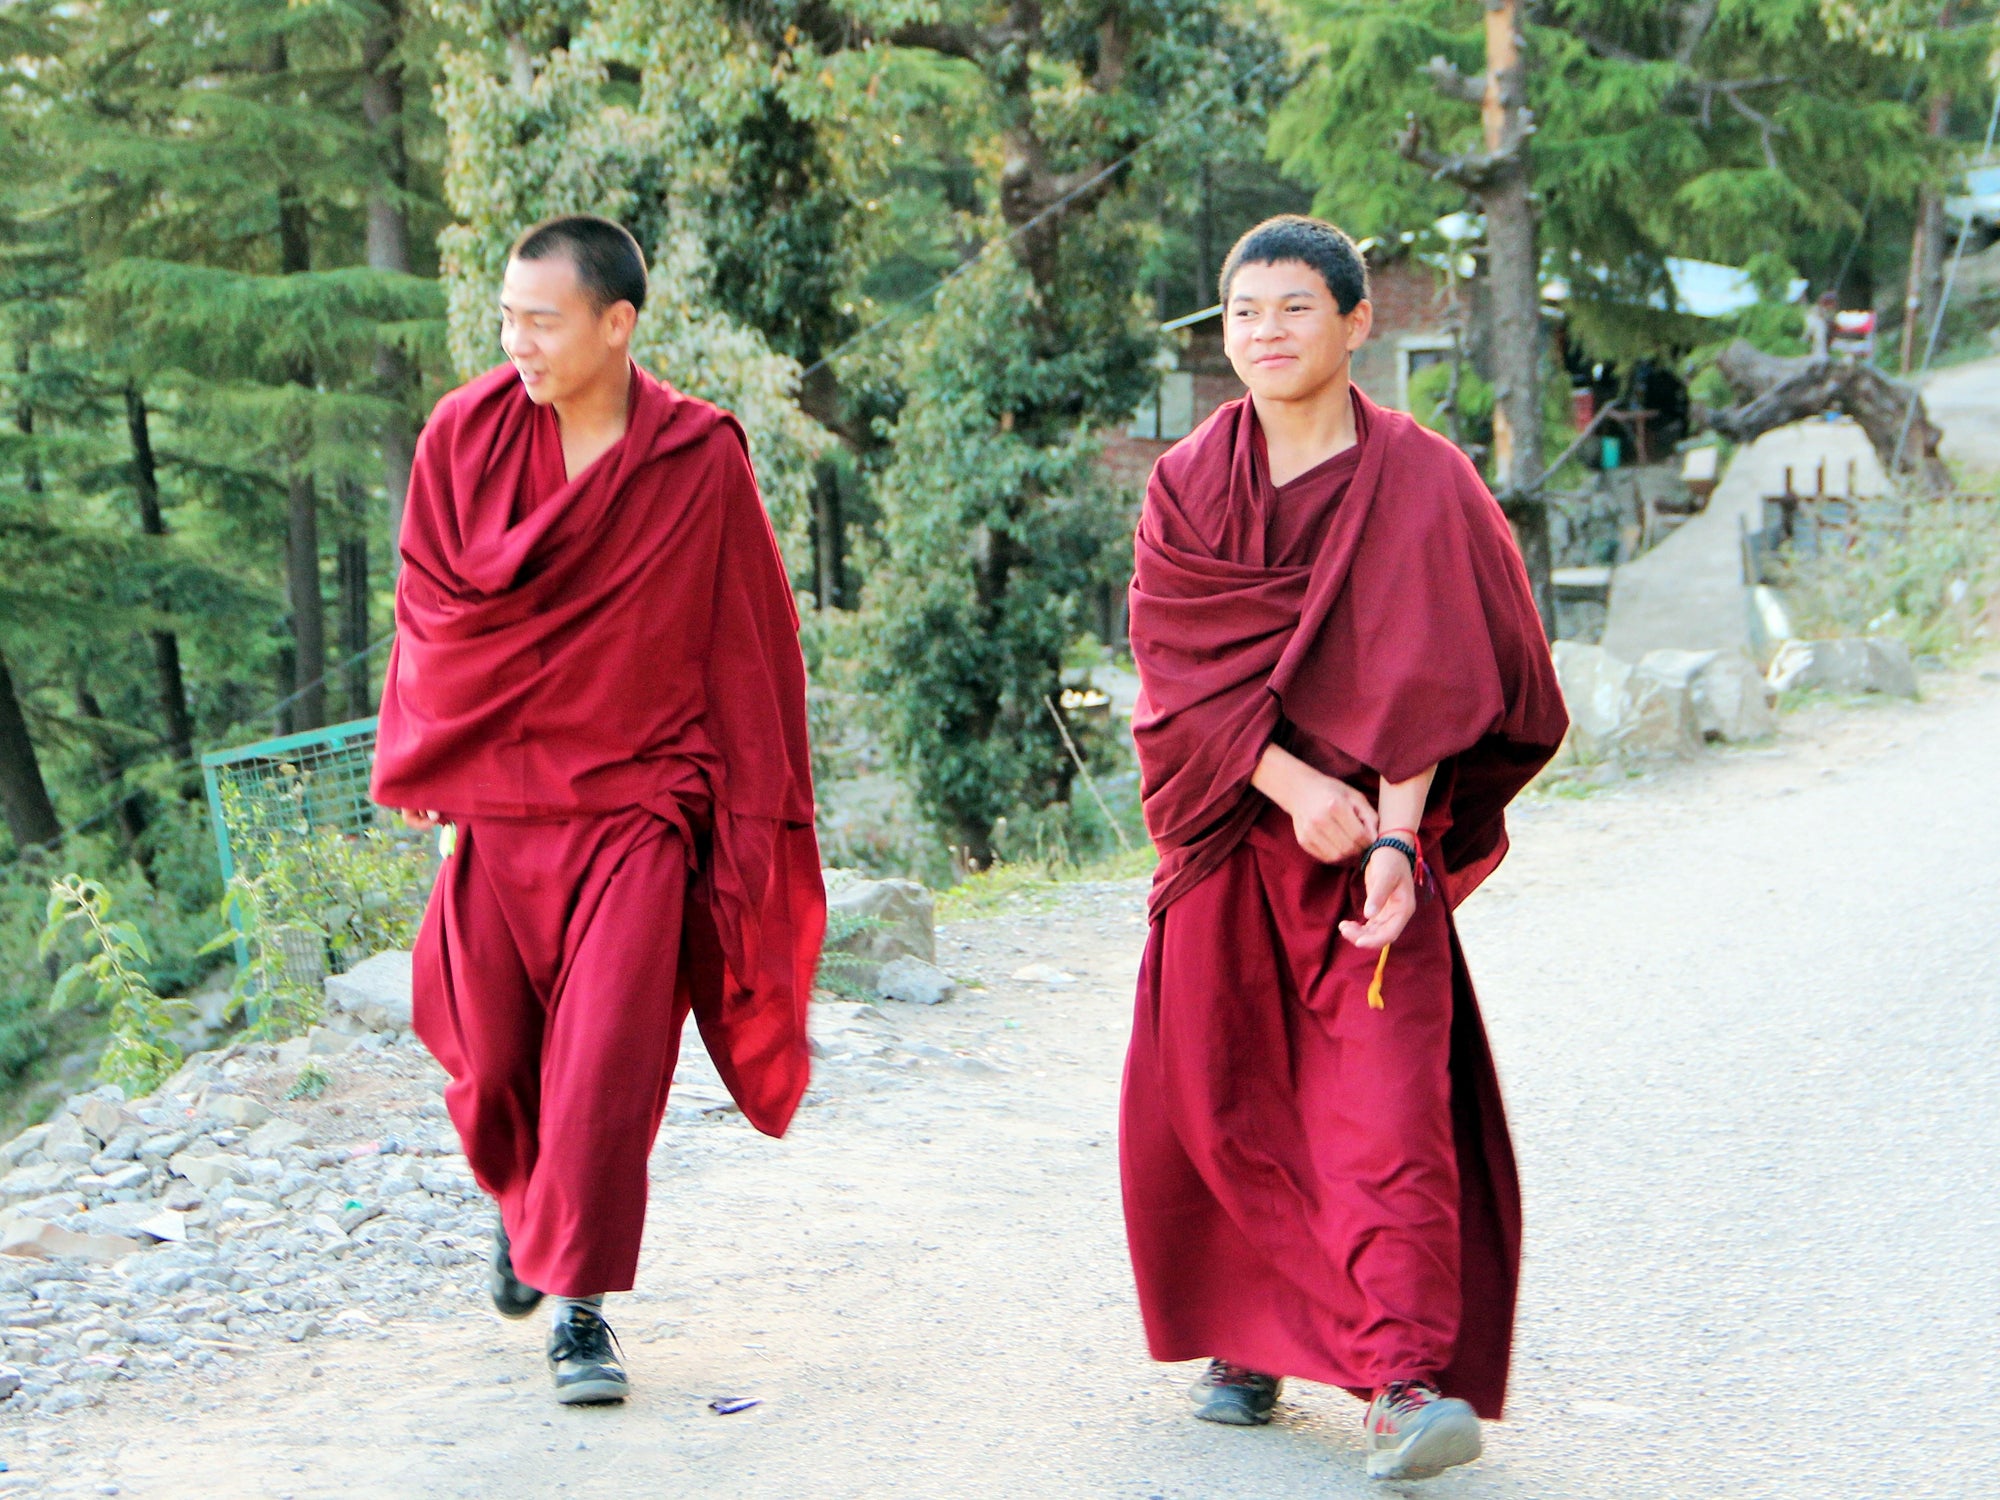 The Tibetan Buddhist community